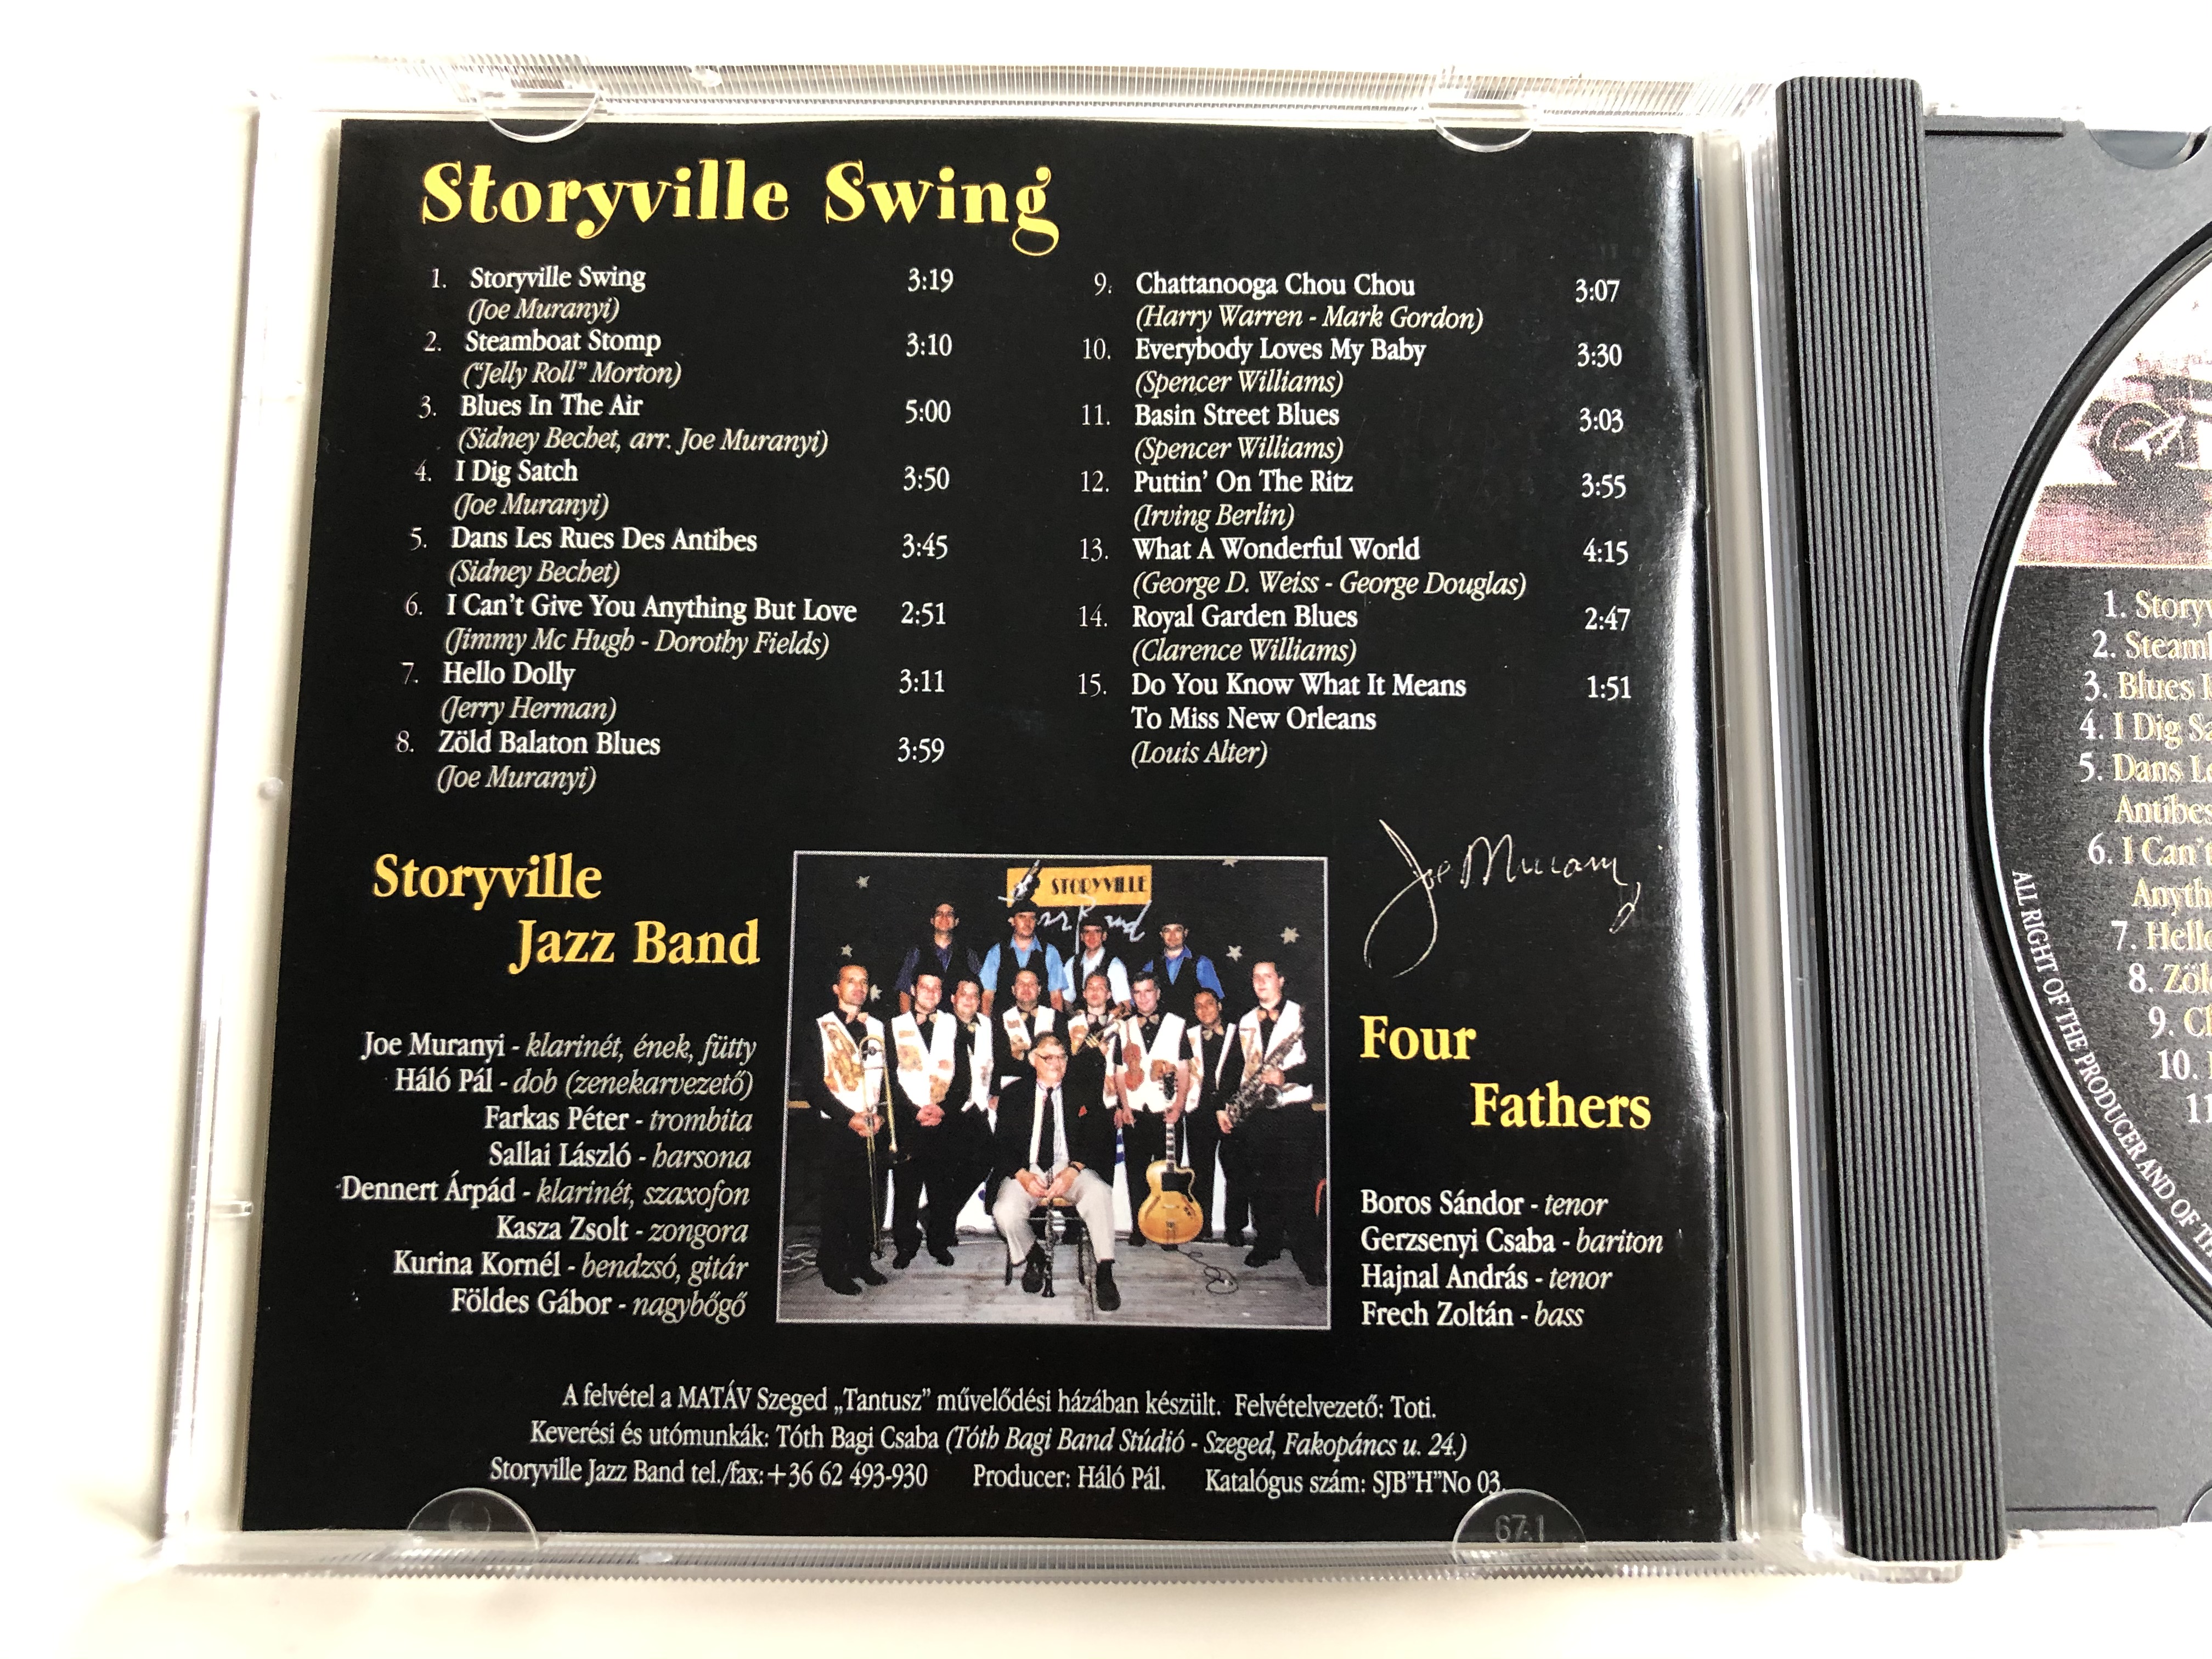 joe-muranyi-storyville-jazz-band-storyville-swing-storyville-jazz-band-audio-cd-1999-sjb-h-no-03-7-.jpg